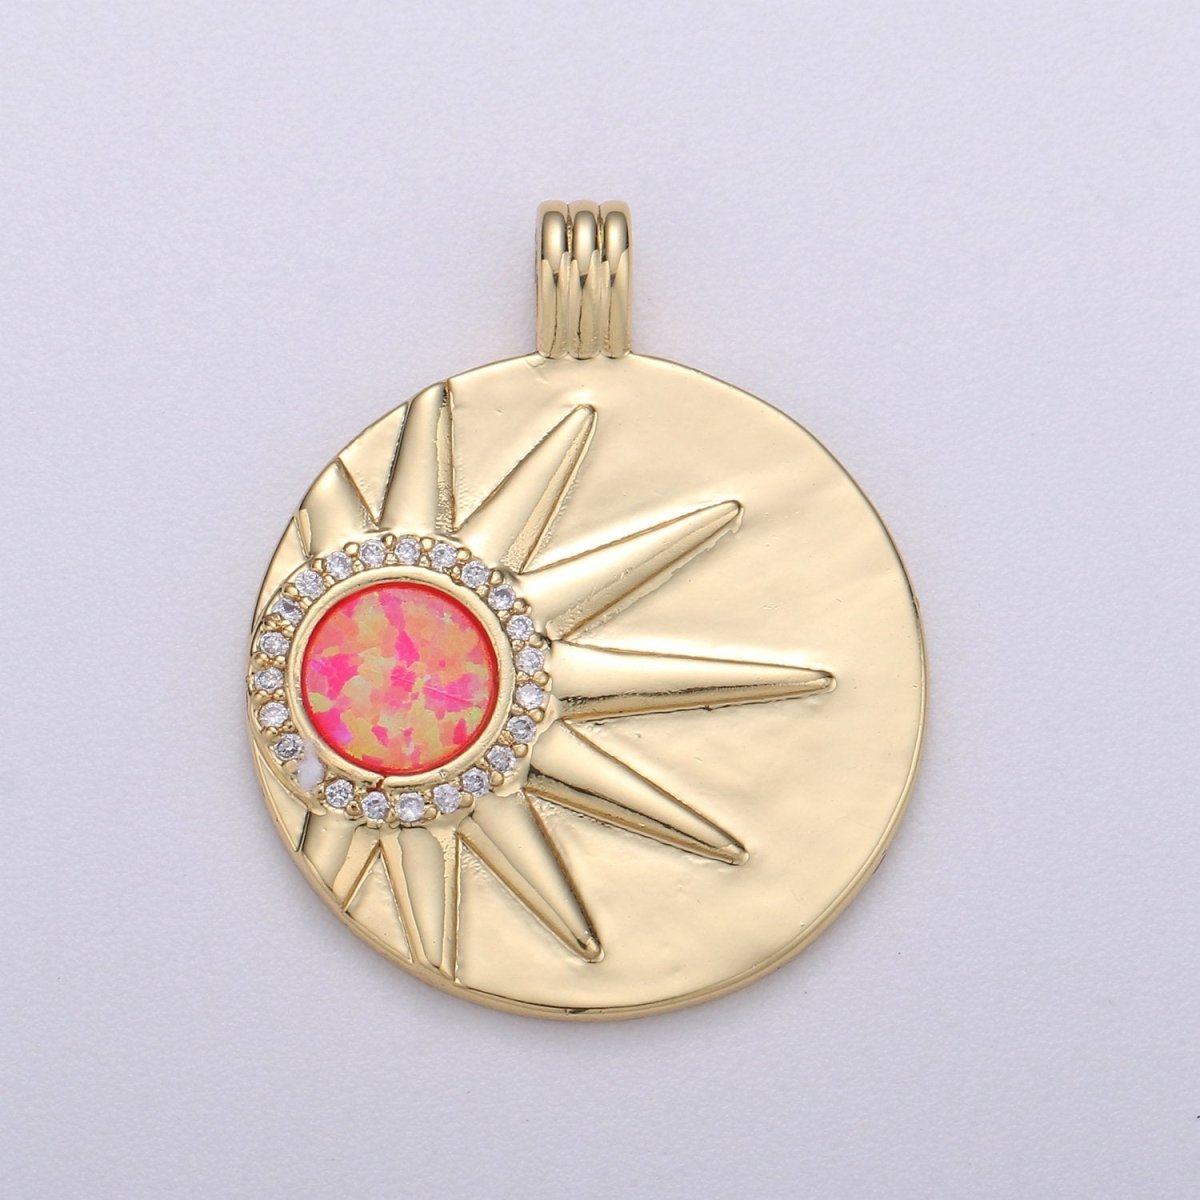 Sun with Opal Pendants • Gold Celestial Pendant • 14k Gold Filled Pendant Medallion Charm Sunburst Jewelry Supply I-711~I-713 - DLUXCA